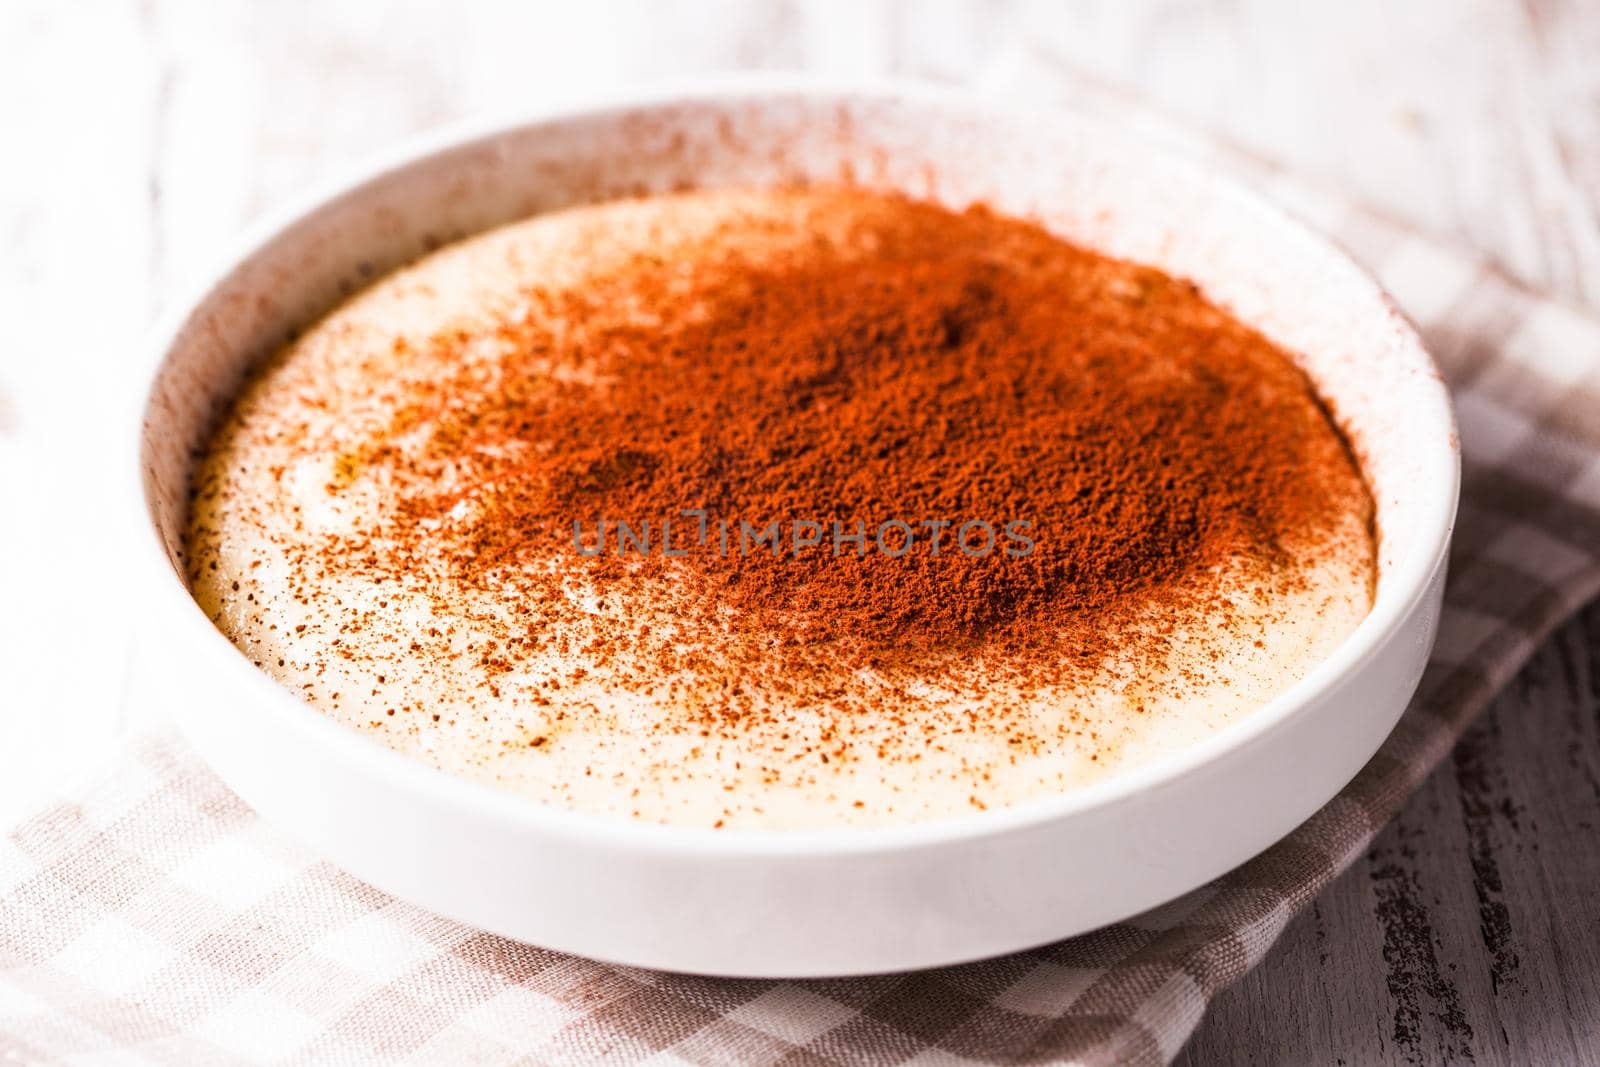 Semolina cream with cocoa powder - sweet breakfast